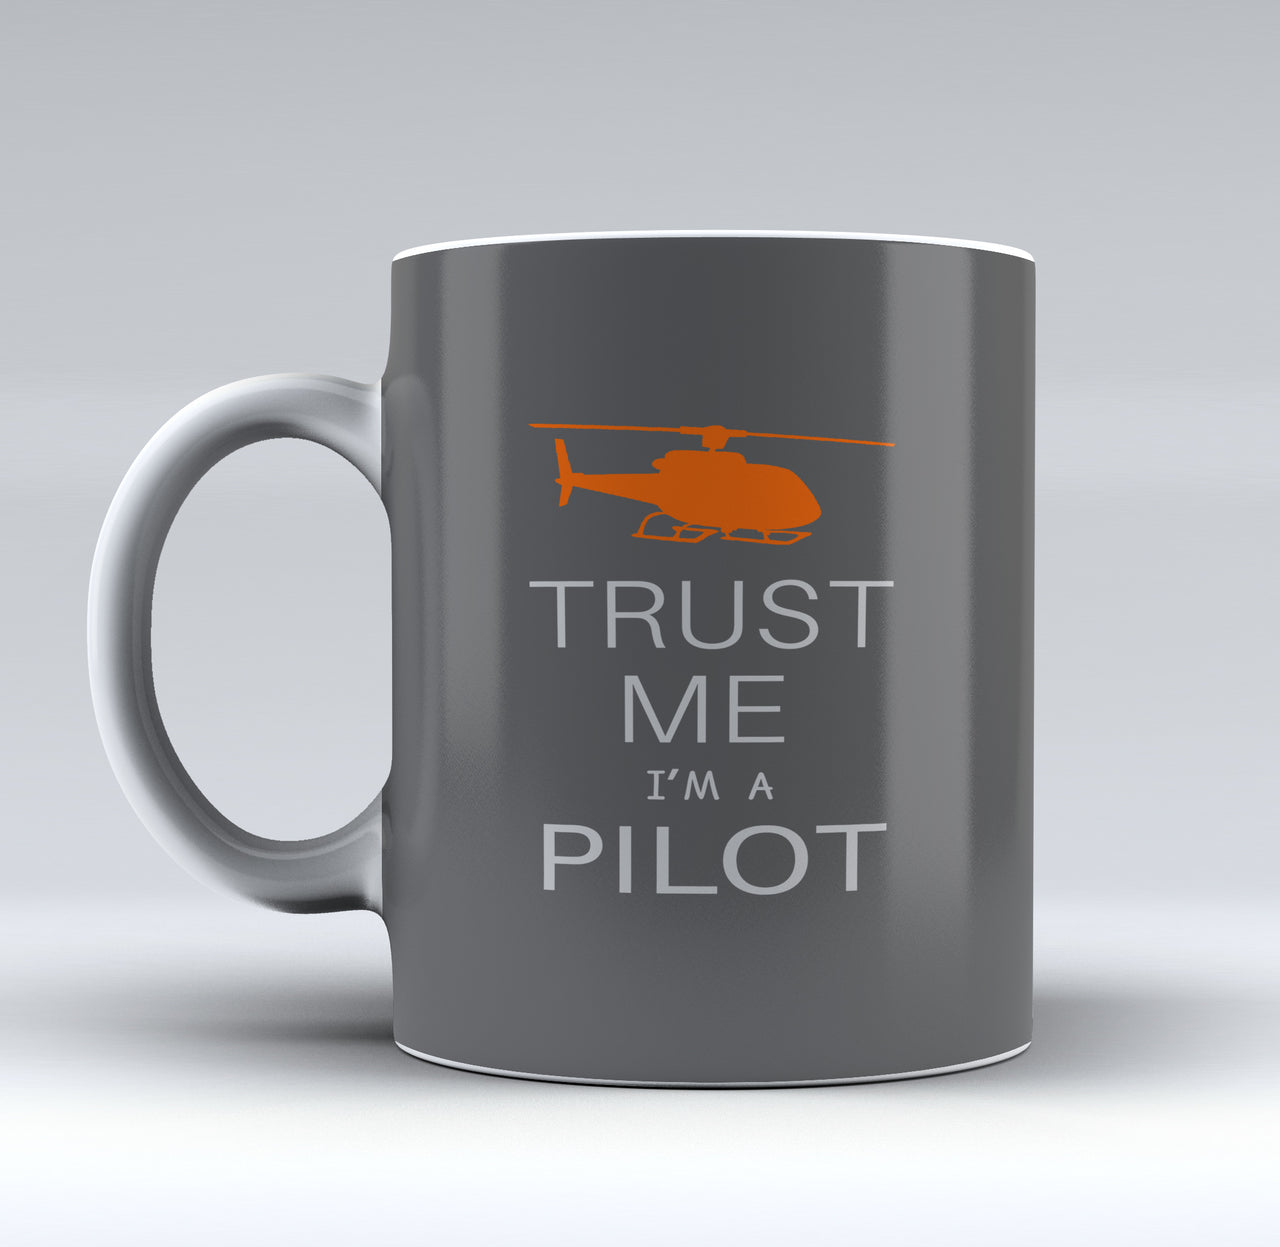 Trust Me I'm a Pilot (Helicopter) Designed Mugs